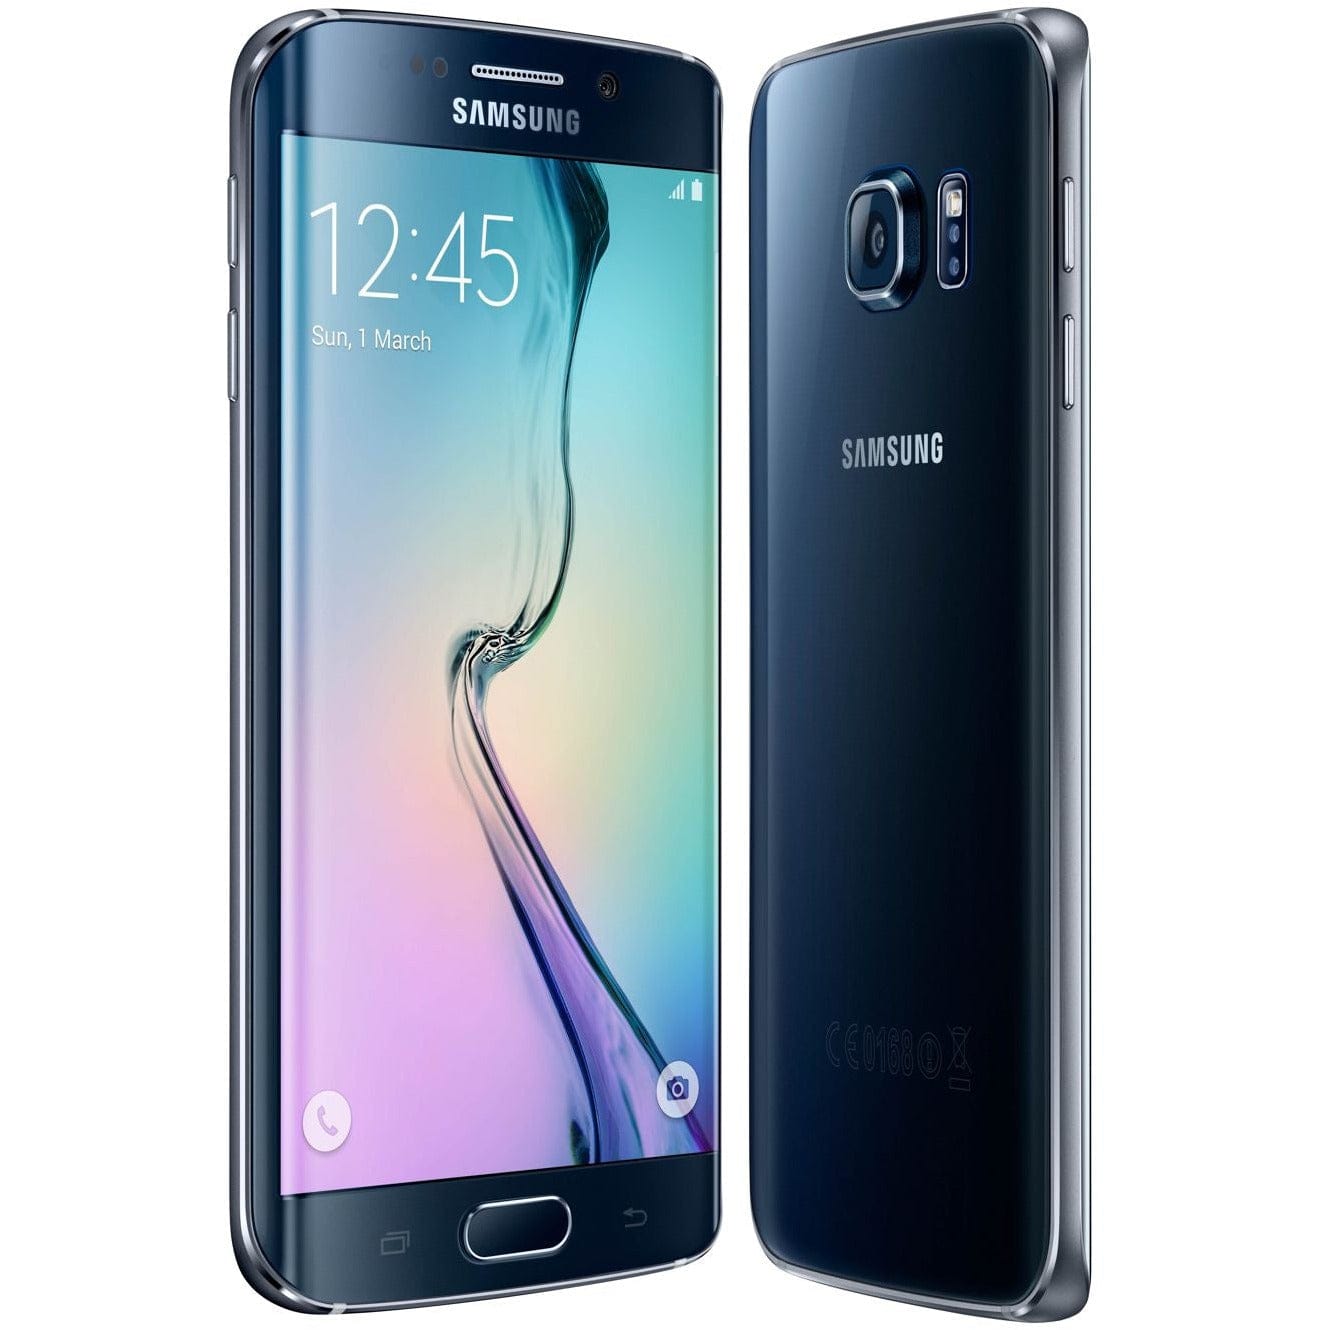 Samsung Galaxy S6 edge - 32 GB - Black Sapphire - Verizon Unlocked - CDMA